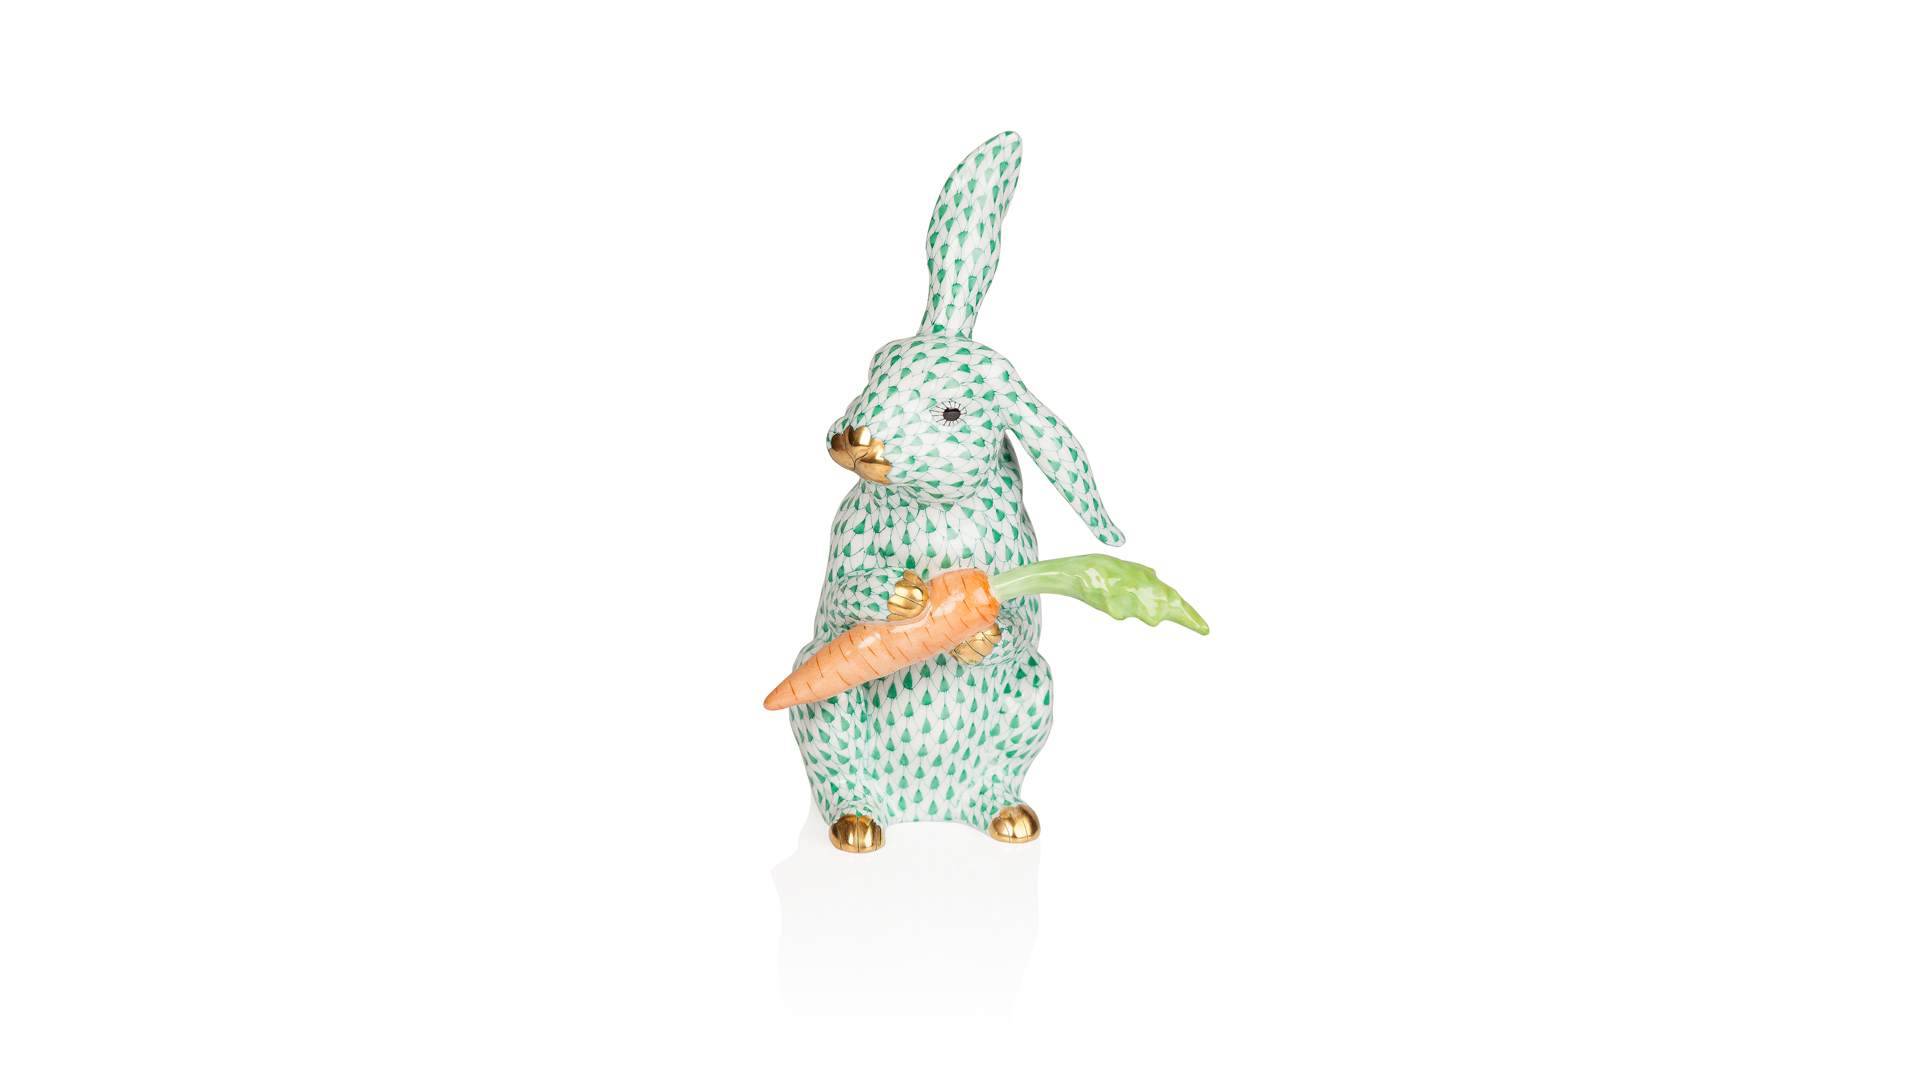 Фигурка Herend Кролик с морковкой 20 см